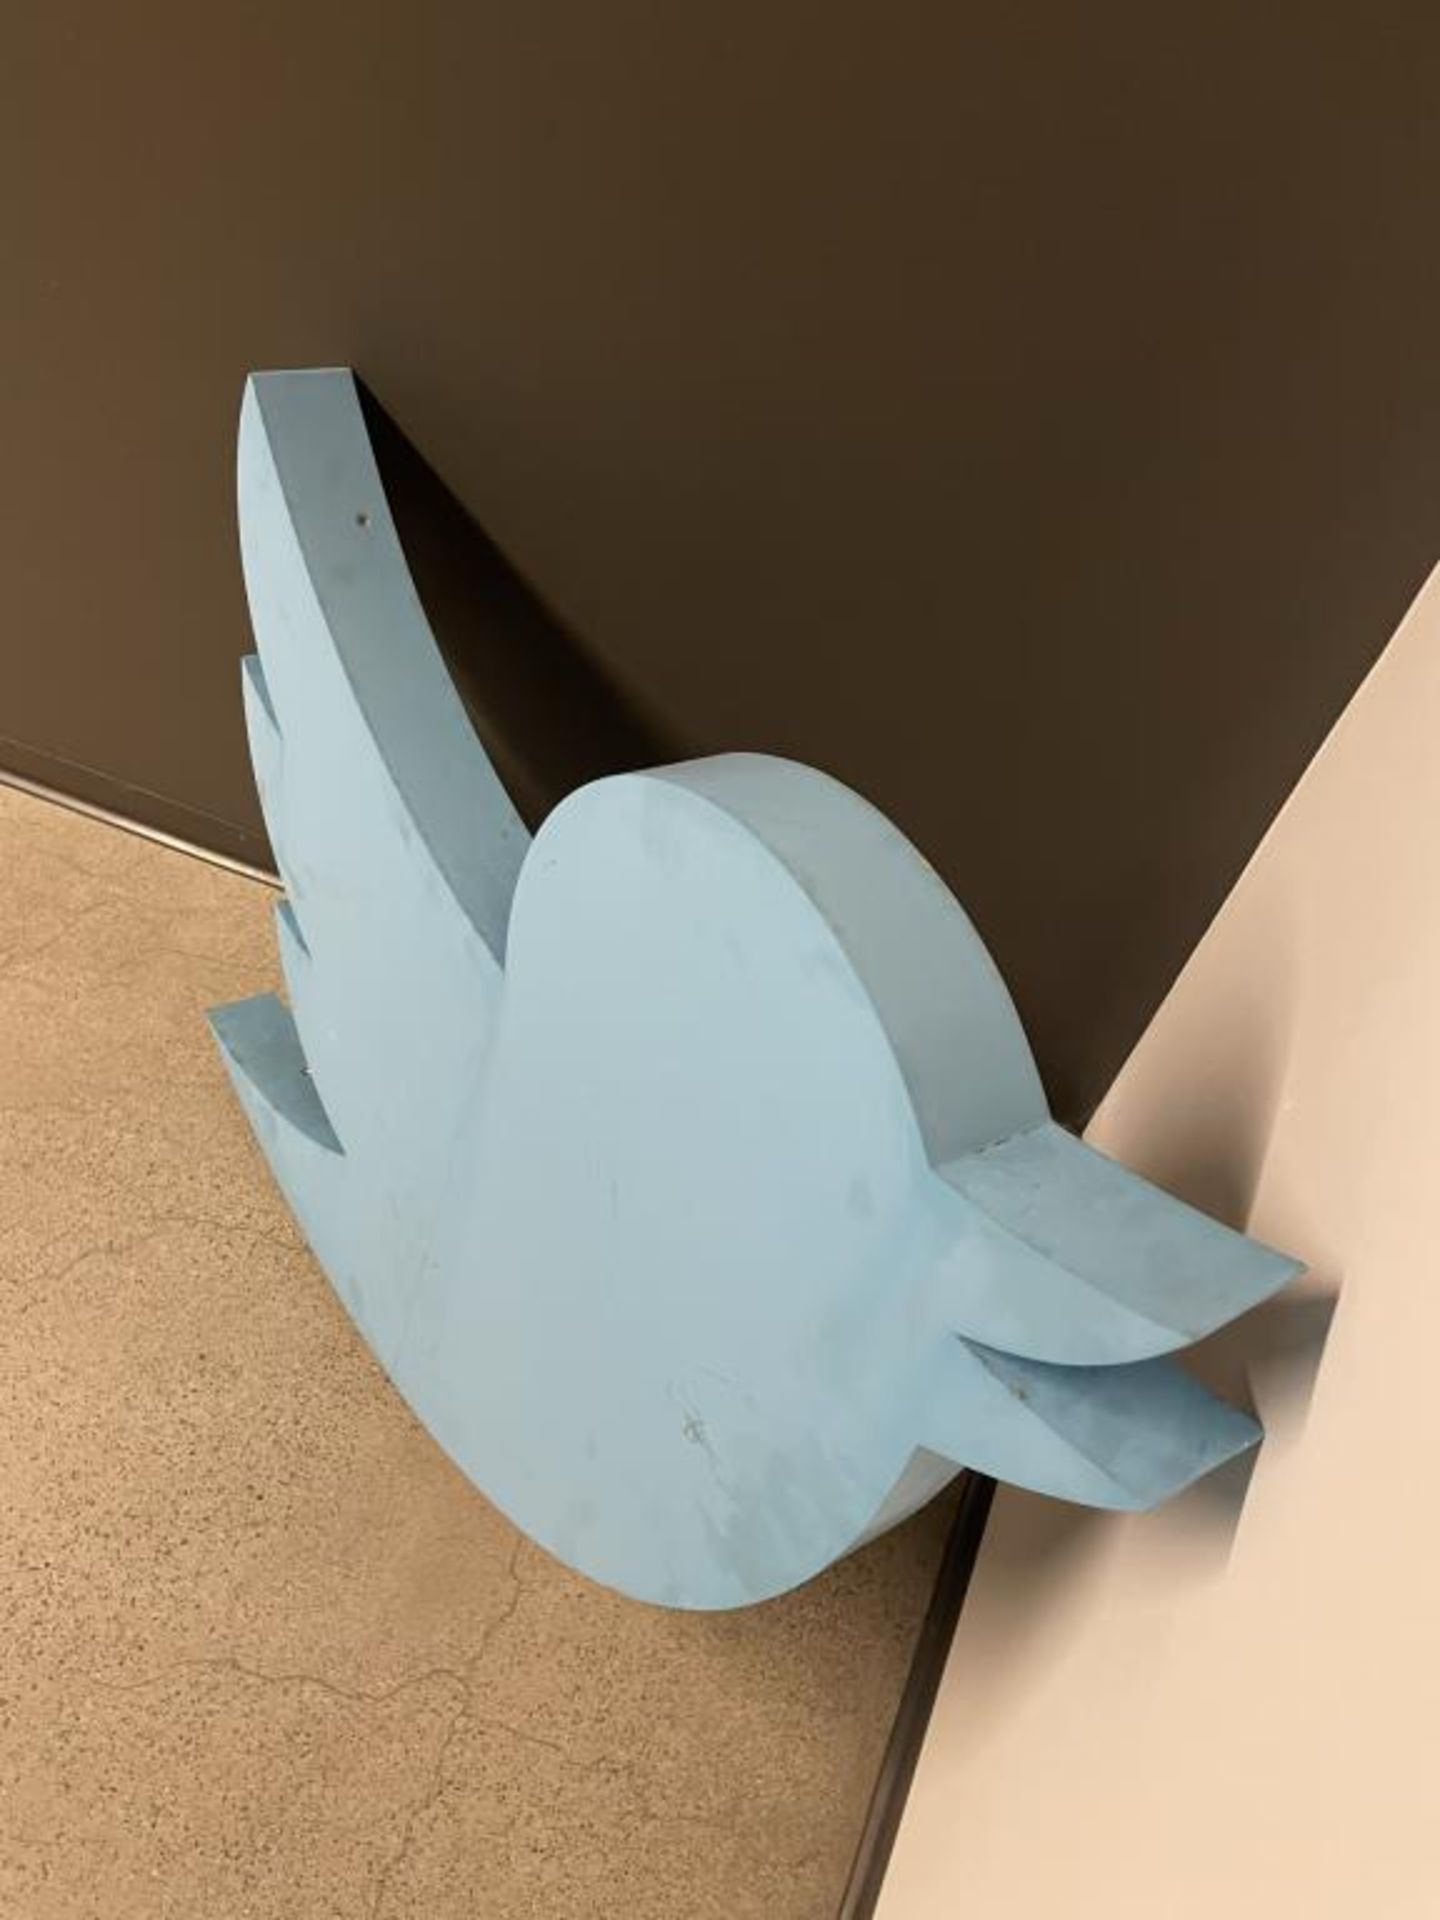 Twitter Bird Logo Fascia Sign - Image 3 of 6